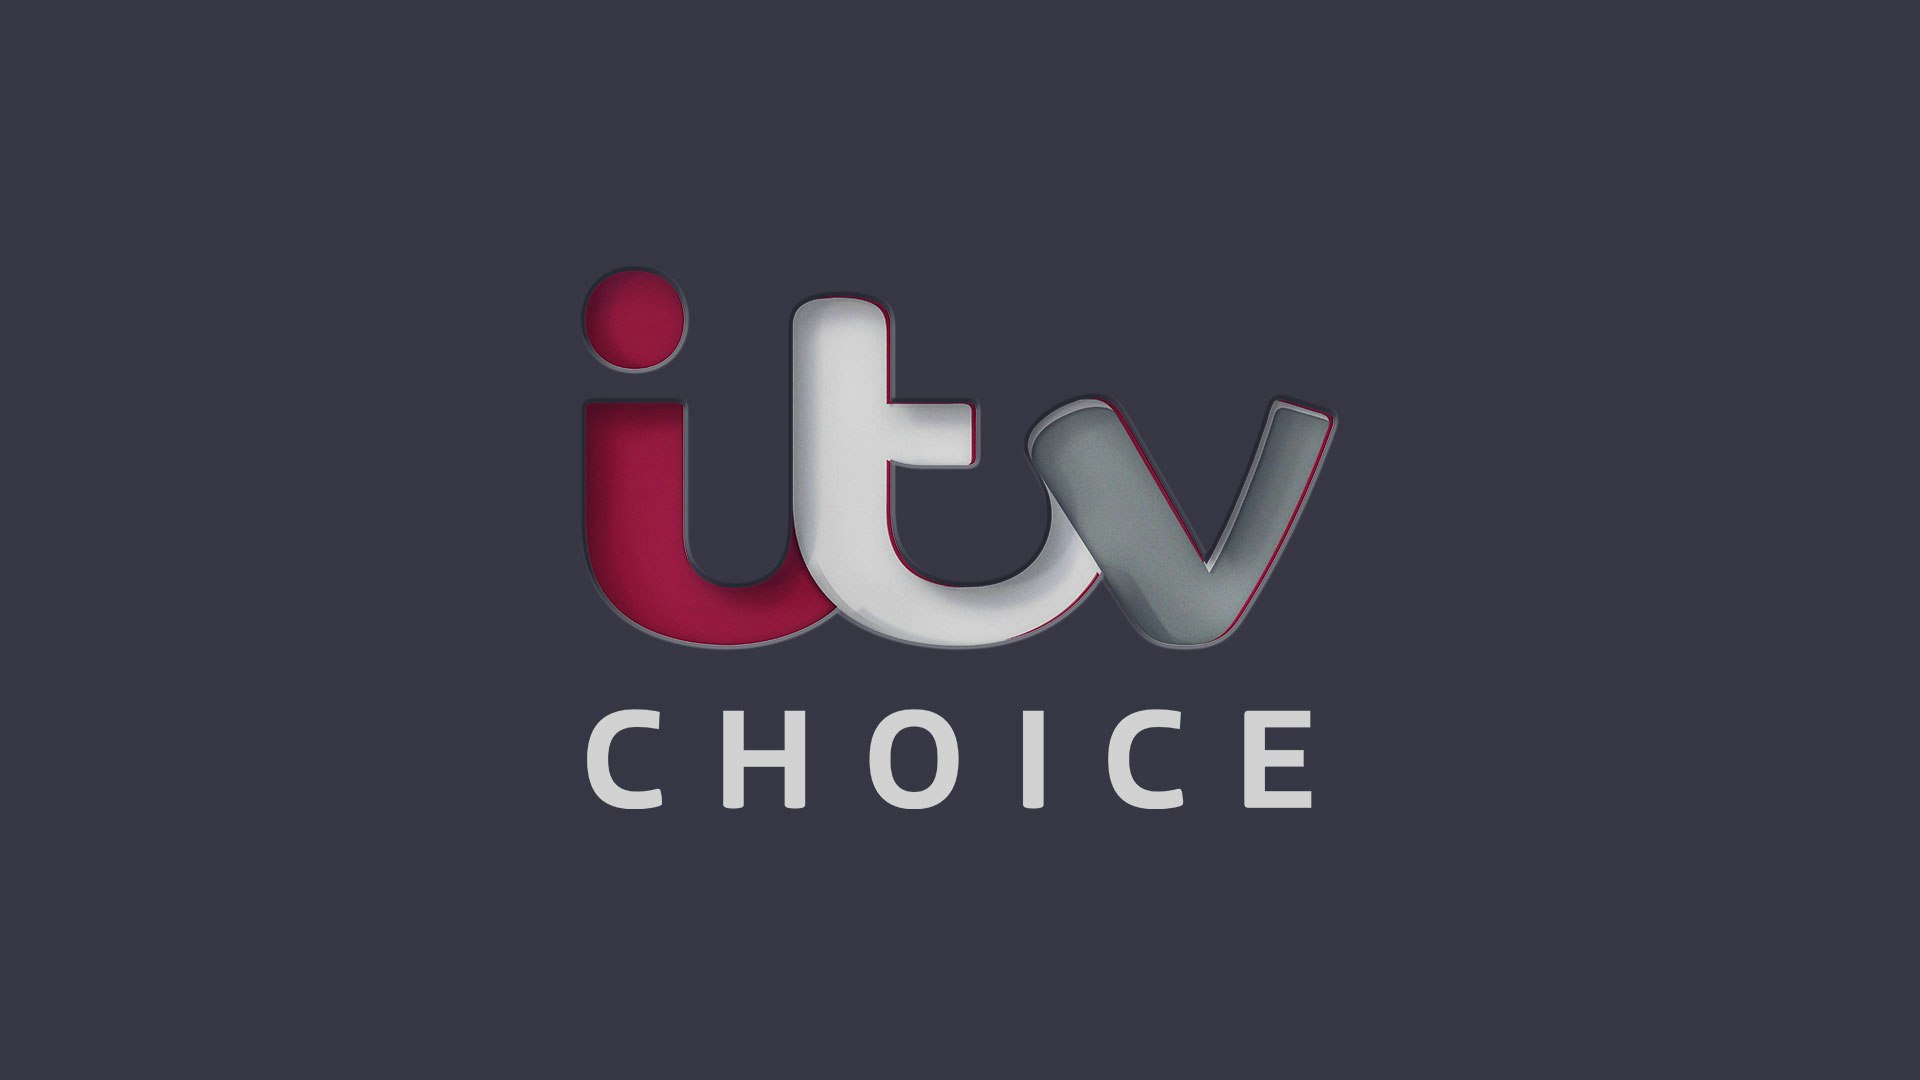 Jason Ford - ITV Choice Identity